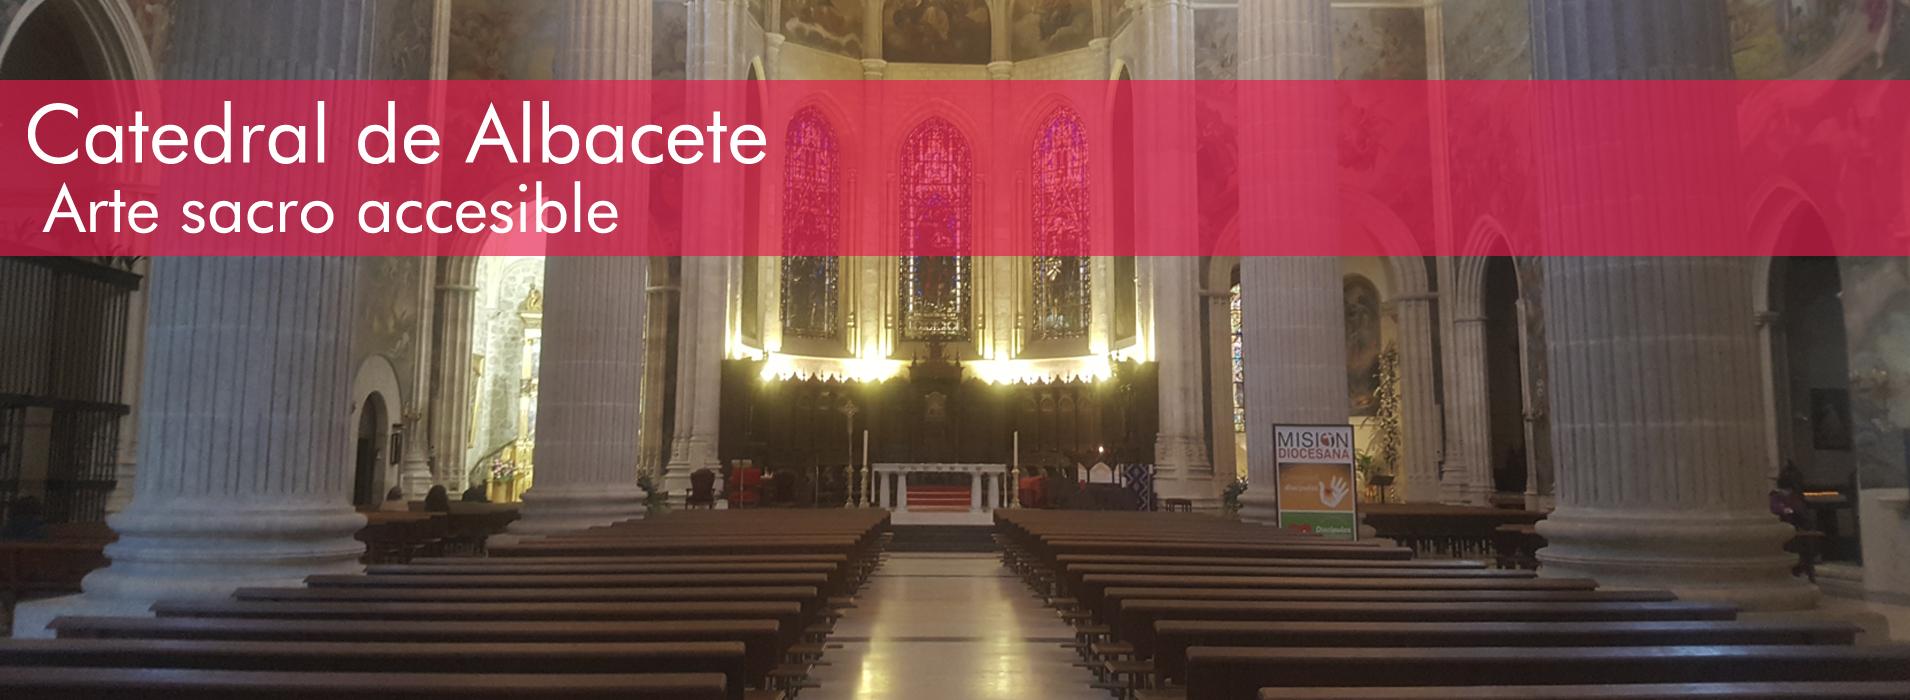 Catedral de Albacete accesible